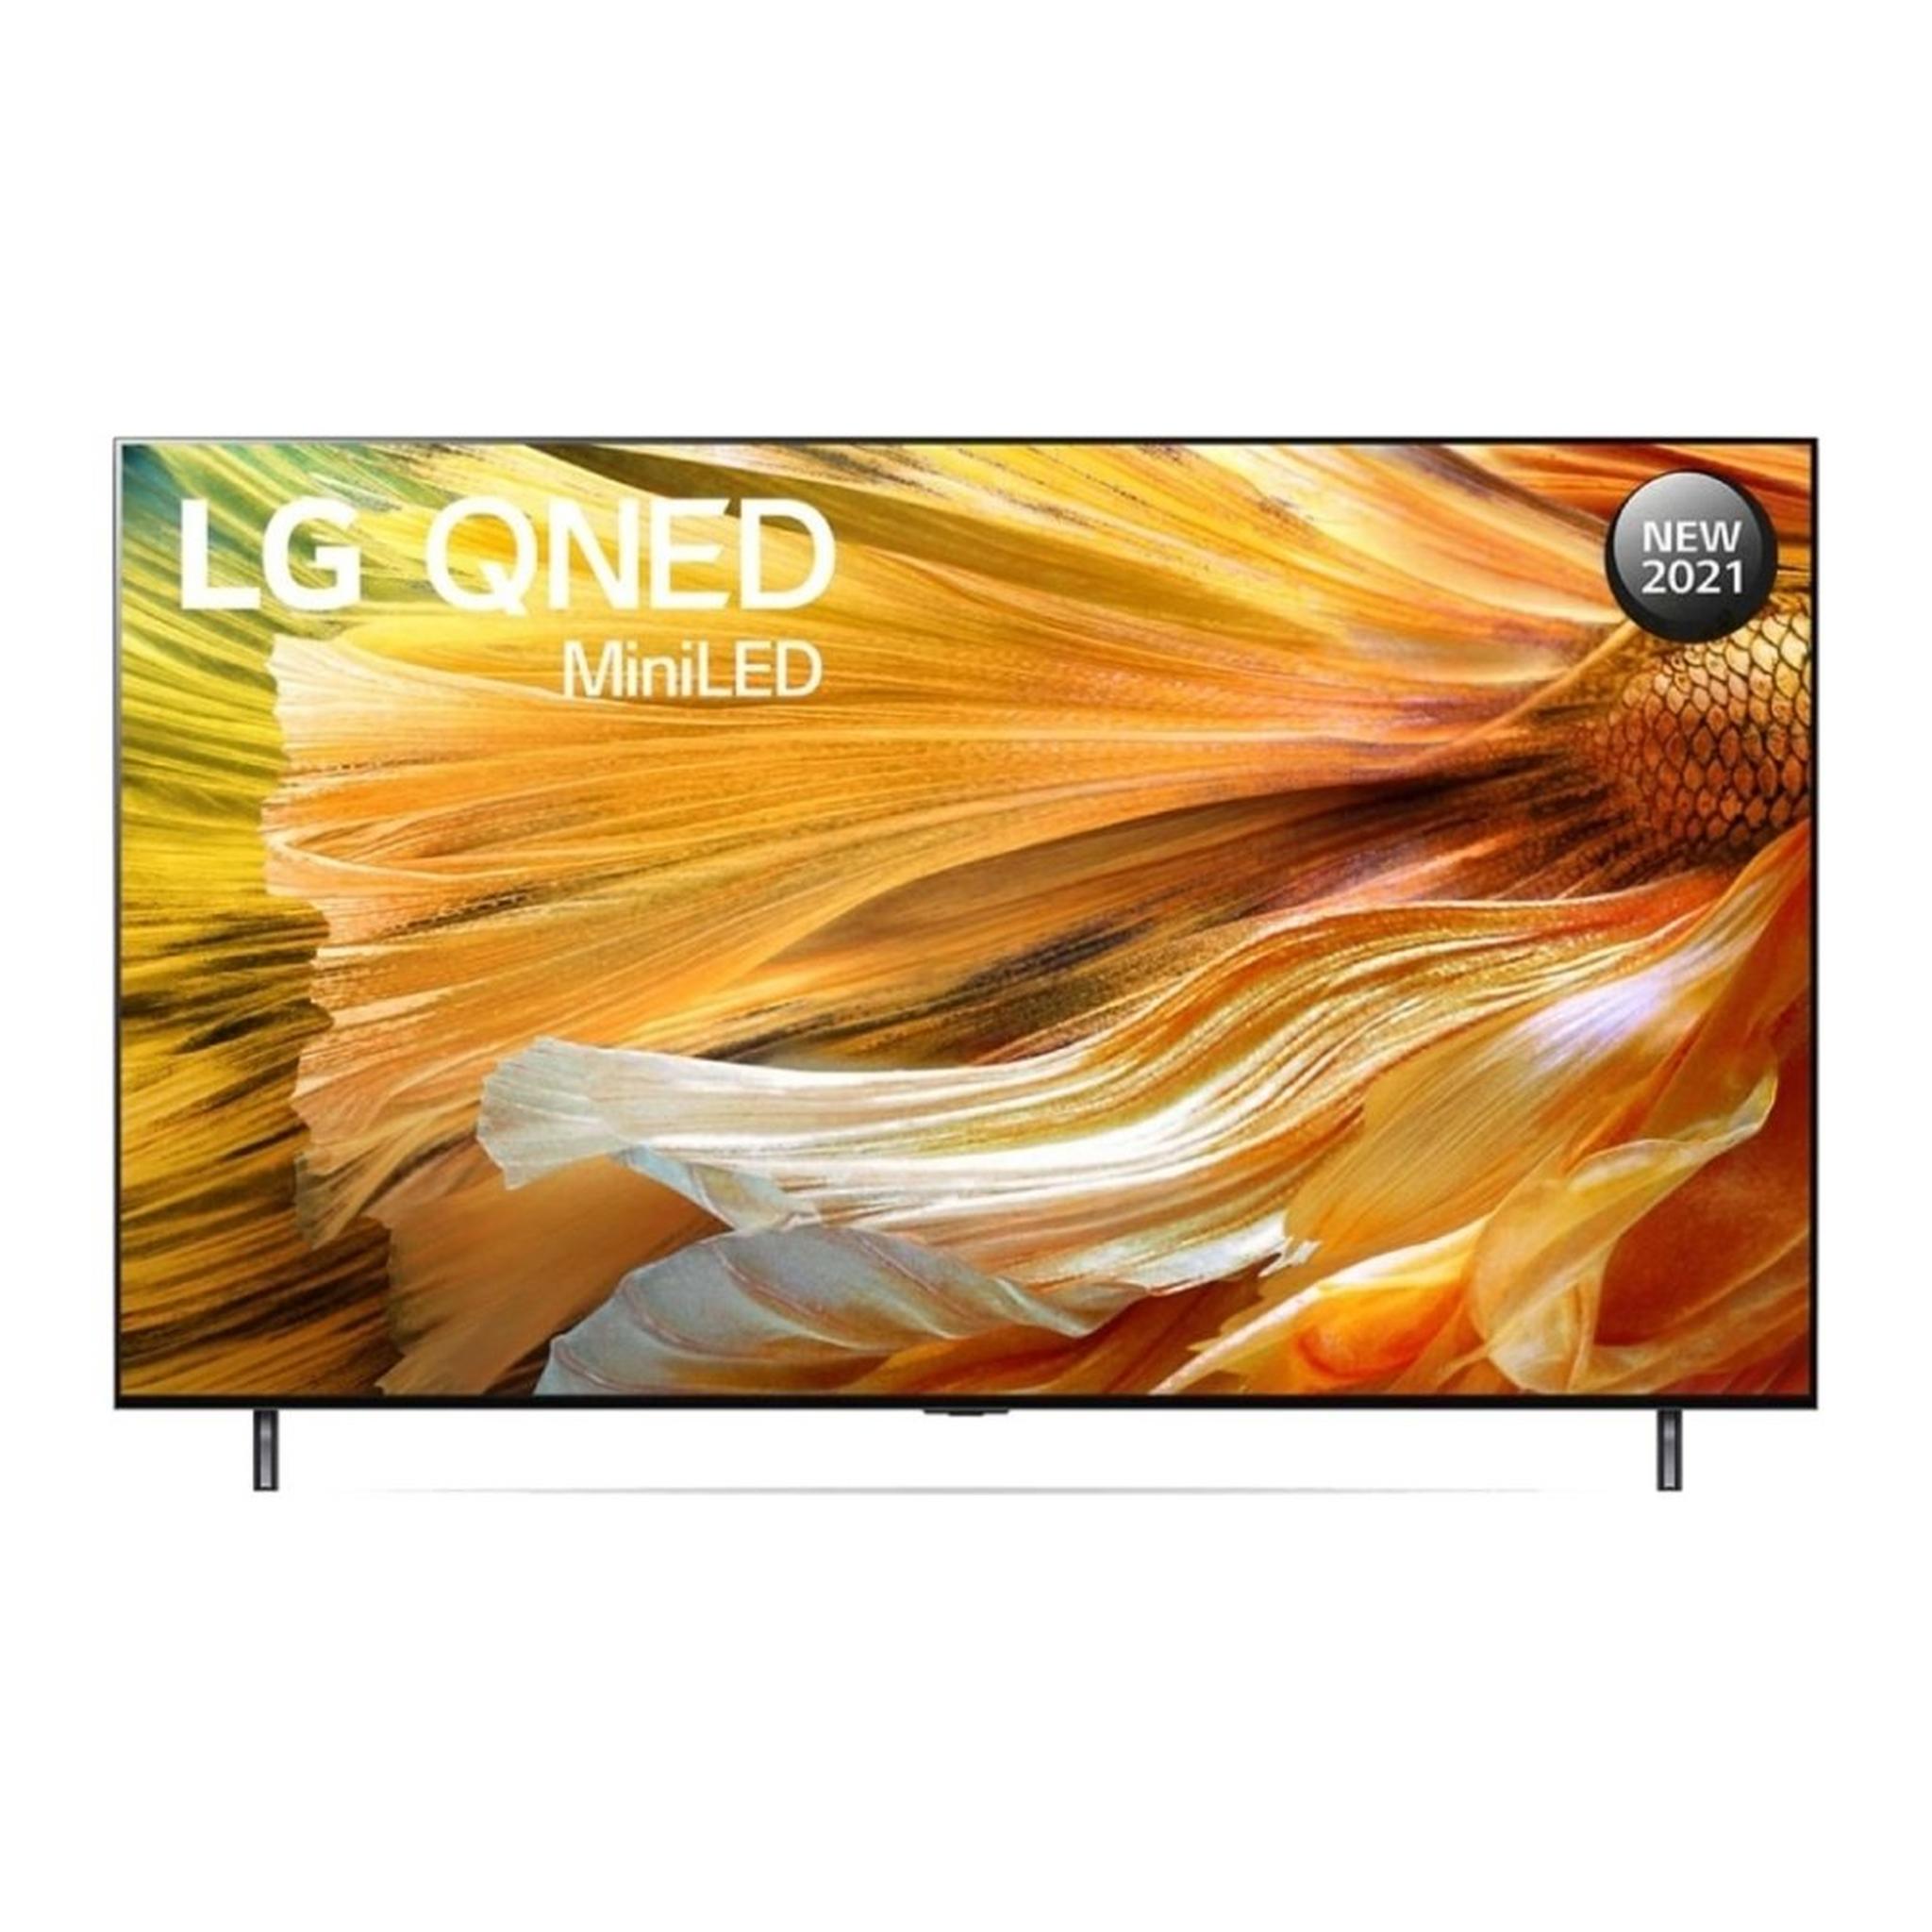 LG 75-inch QNED Mini LED Smart TV (QNED90)